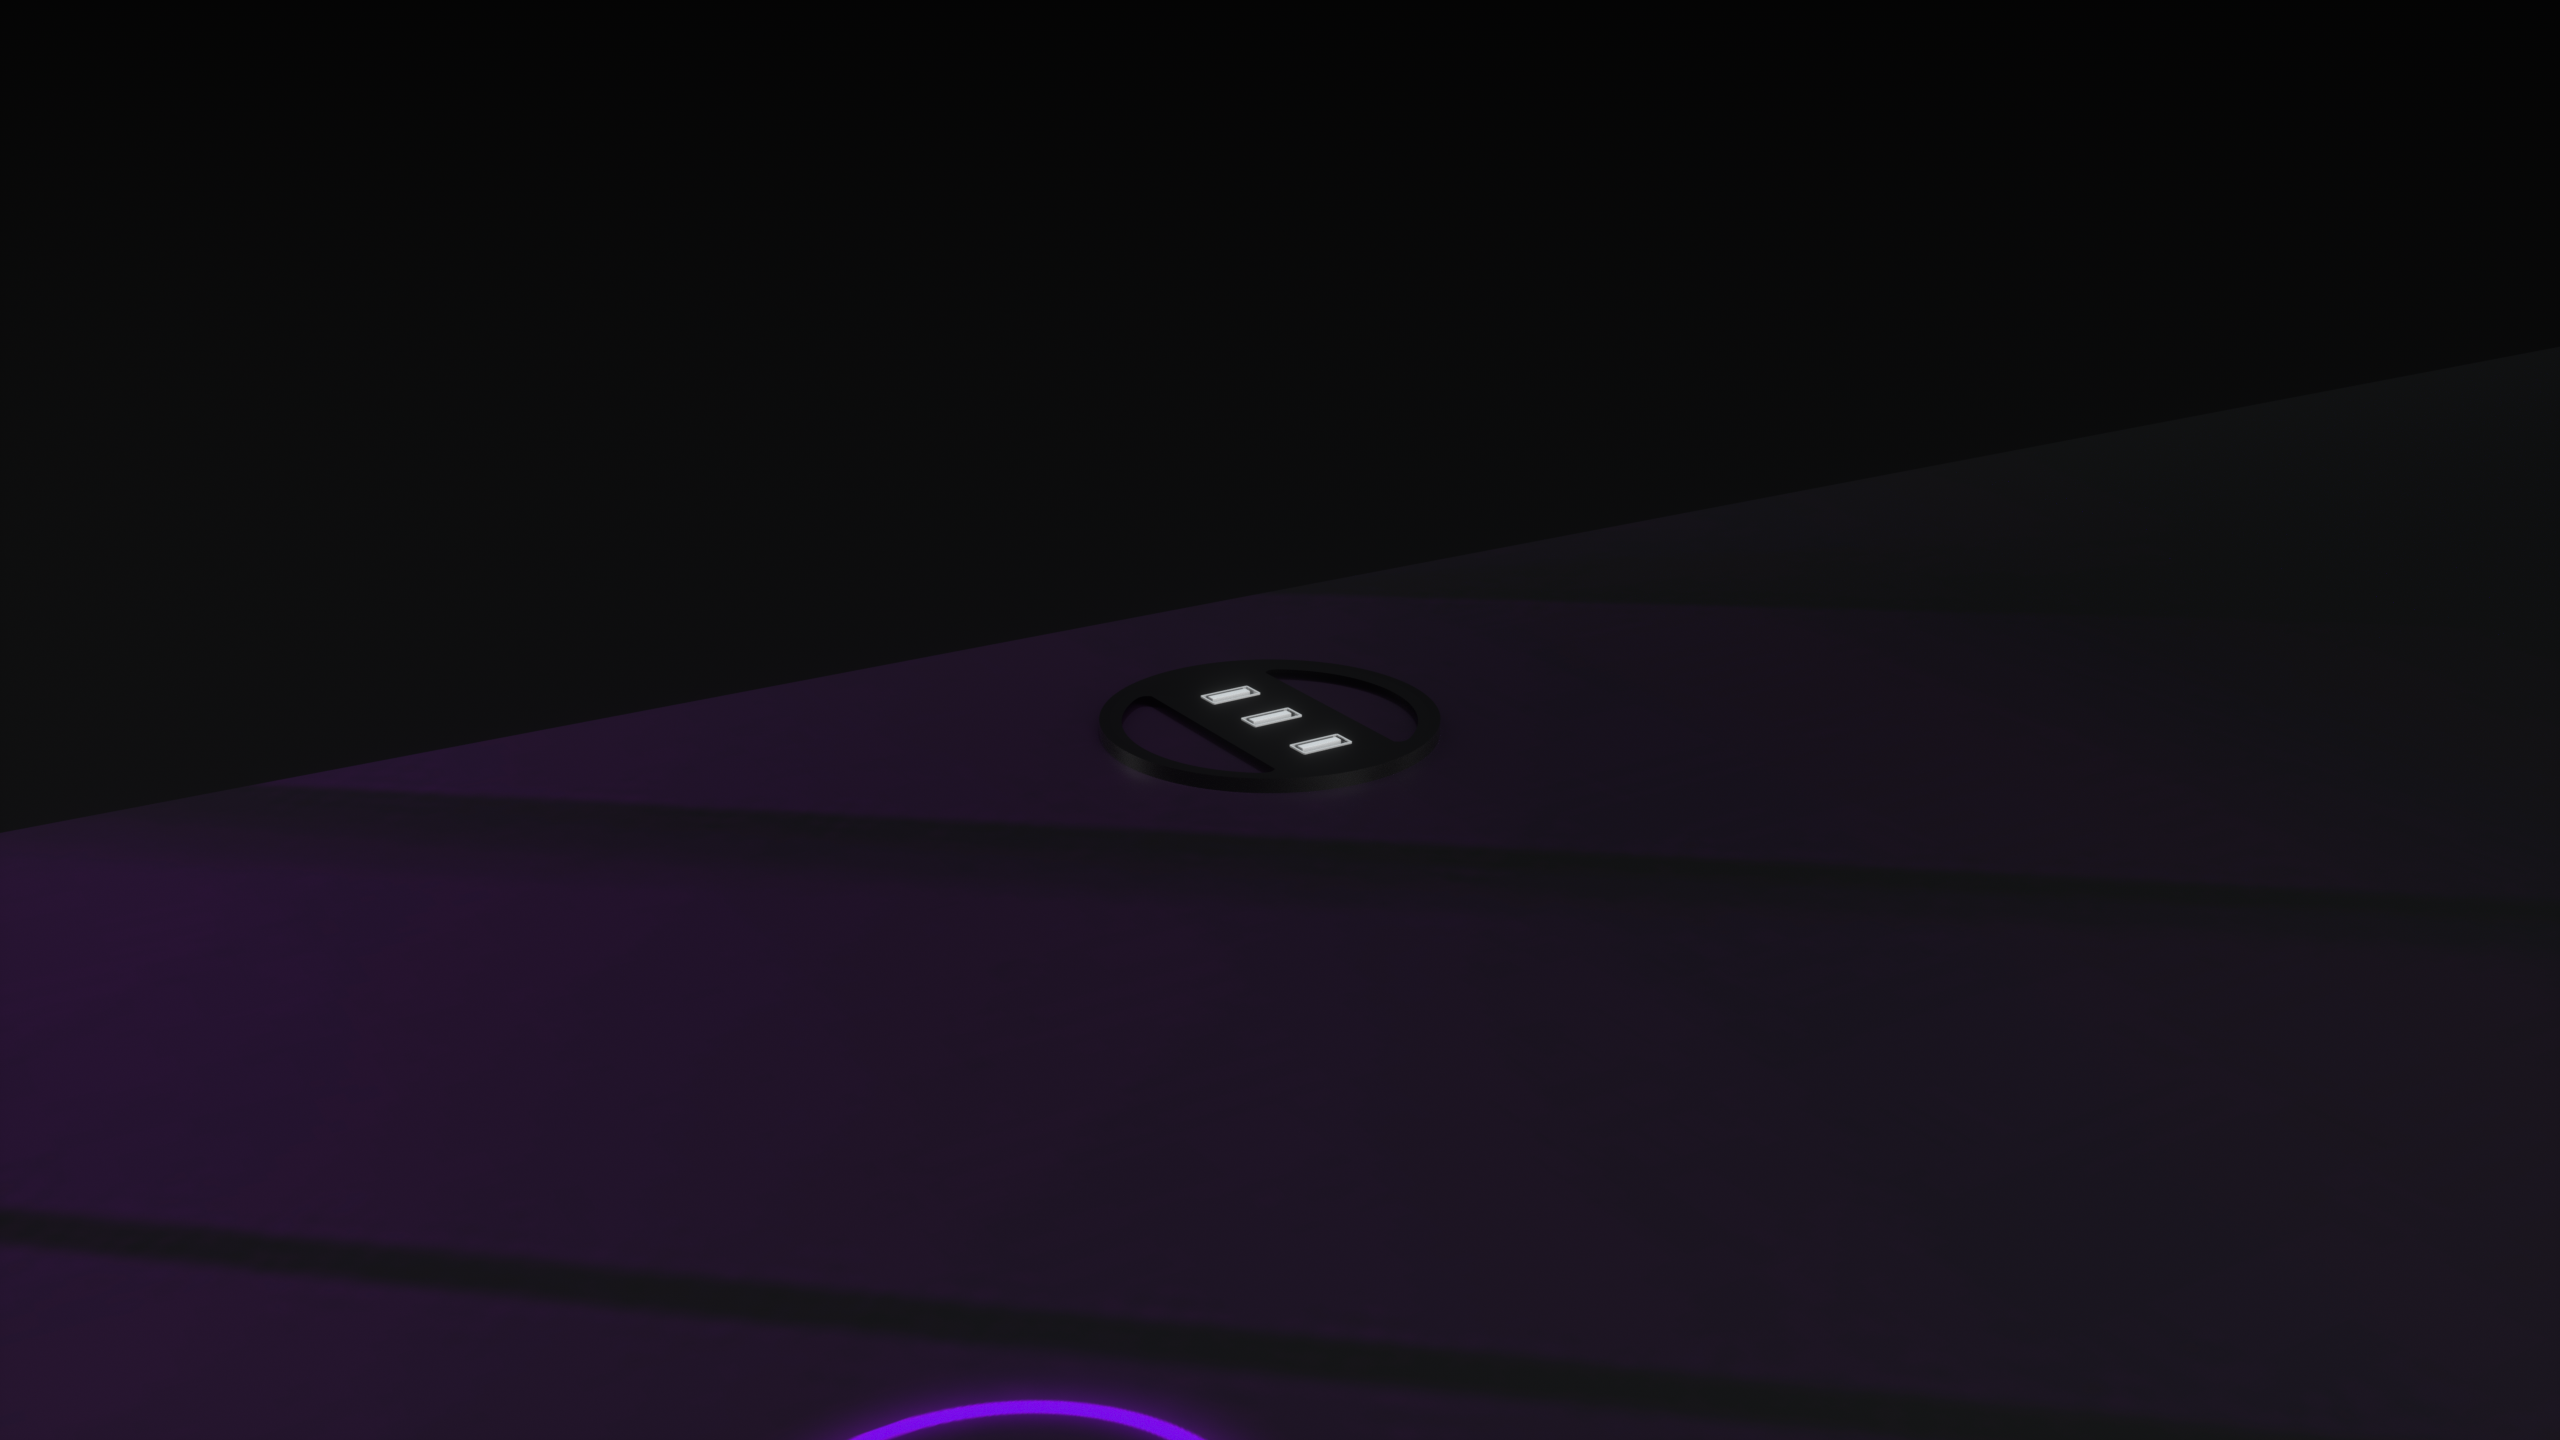 Purple Autodromo Desk With LED Lighting